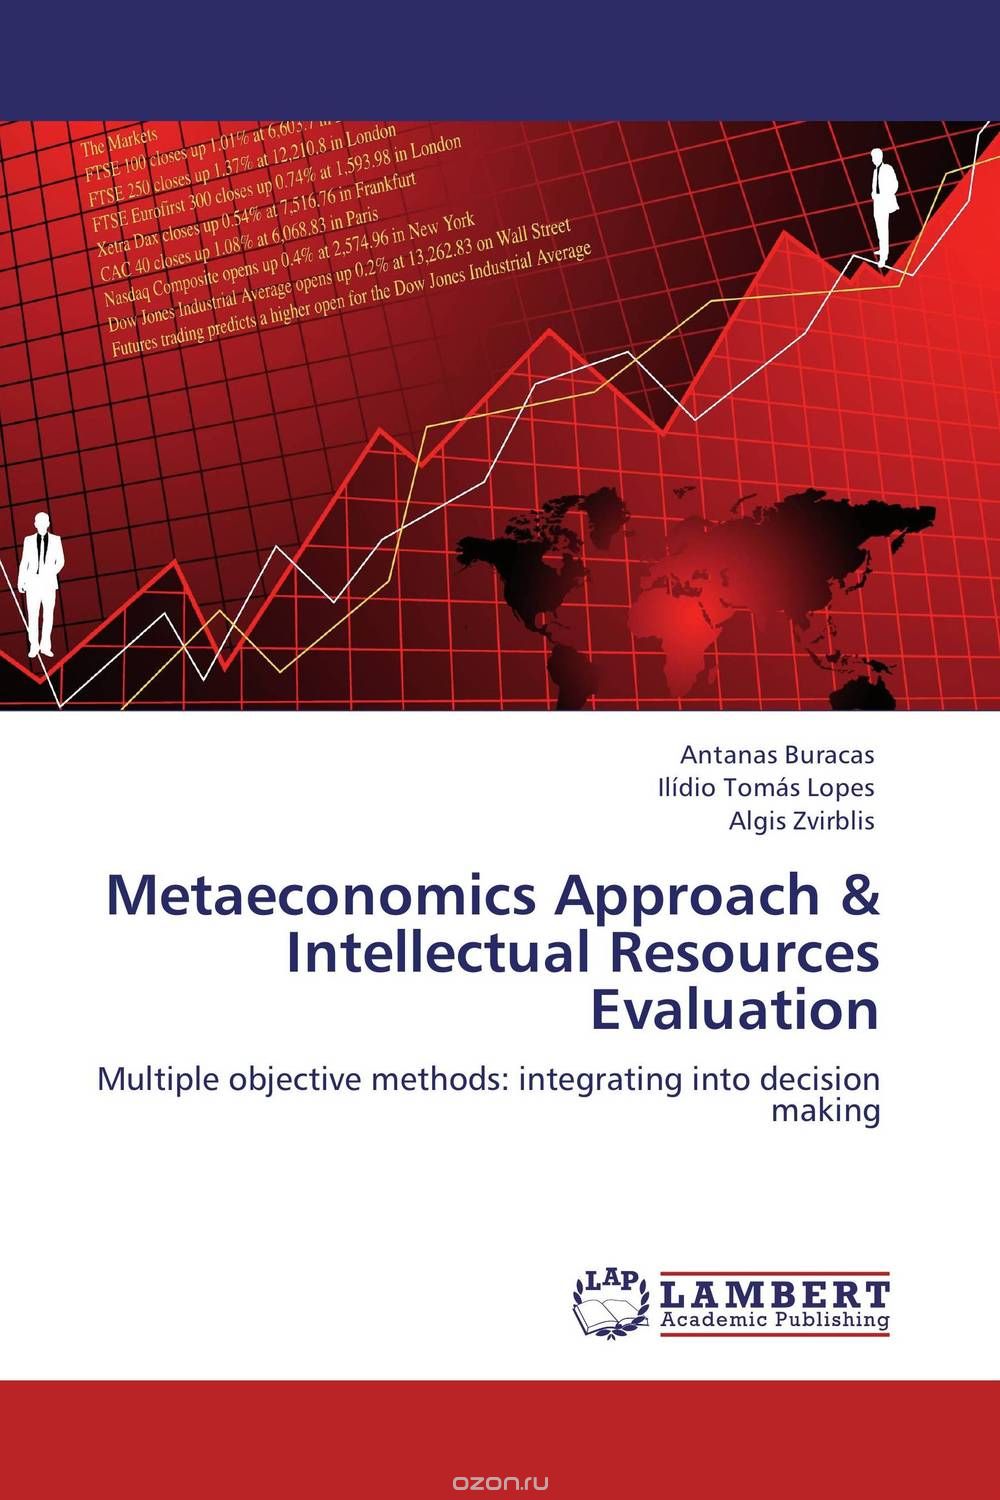 Metaeconomics Approach & Intellectual Resources Evaluation